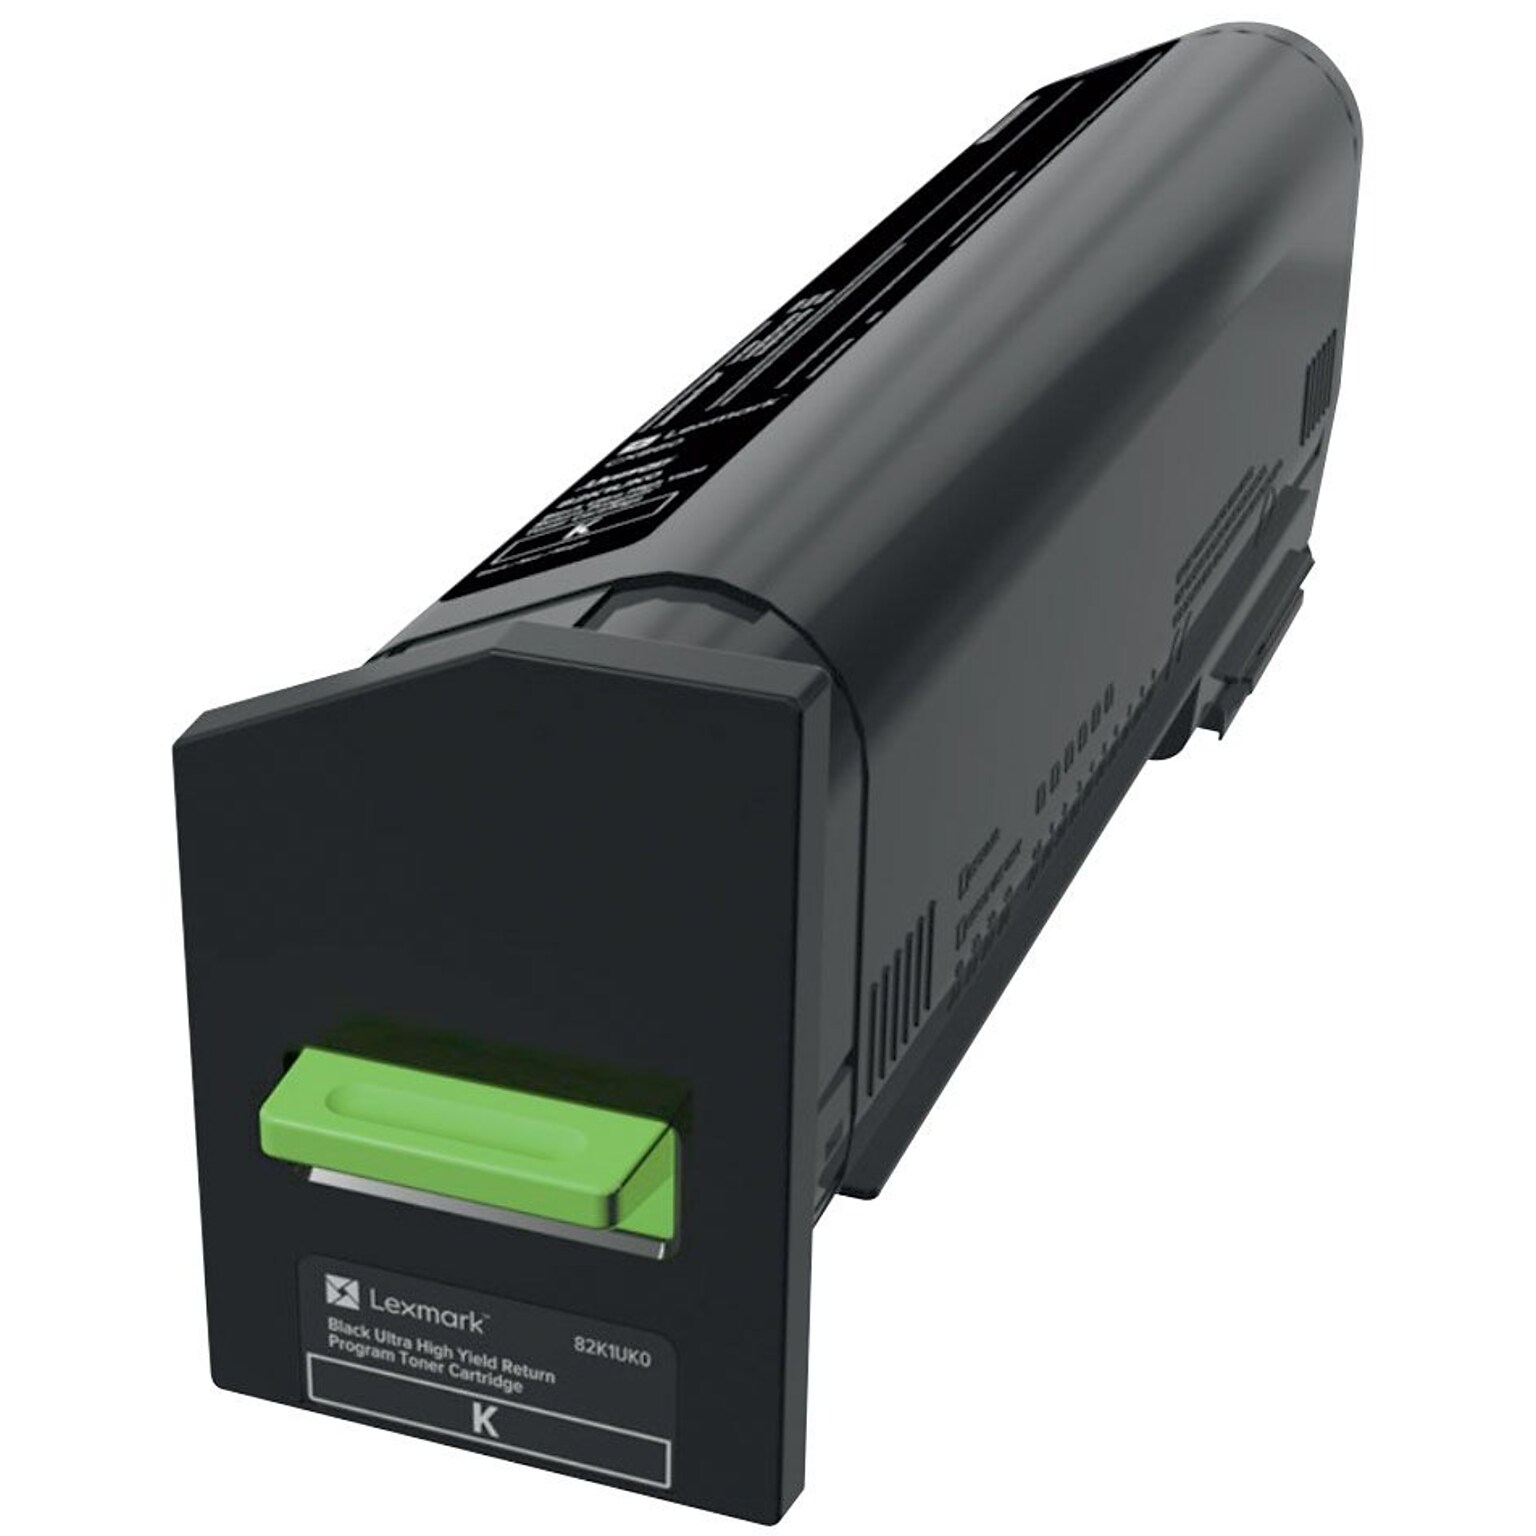 Lexmark CX860 Black Ultra High Yield Toner Cartridge, Prints Up to 55,000 Pages (82K1UK0)